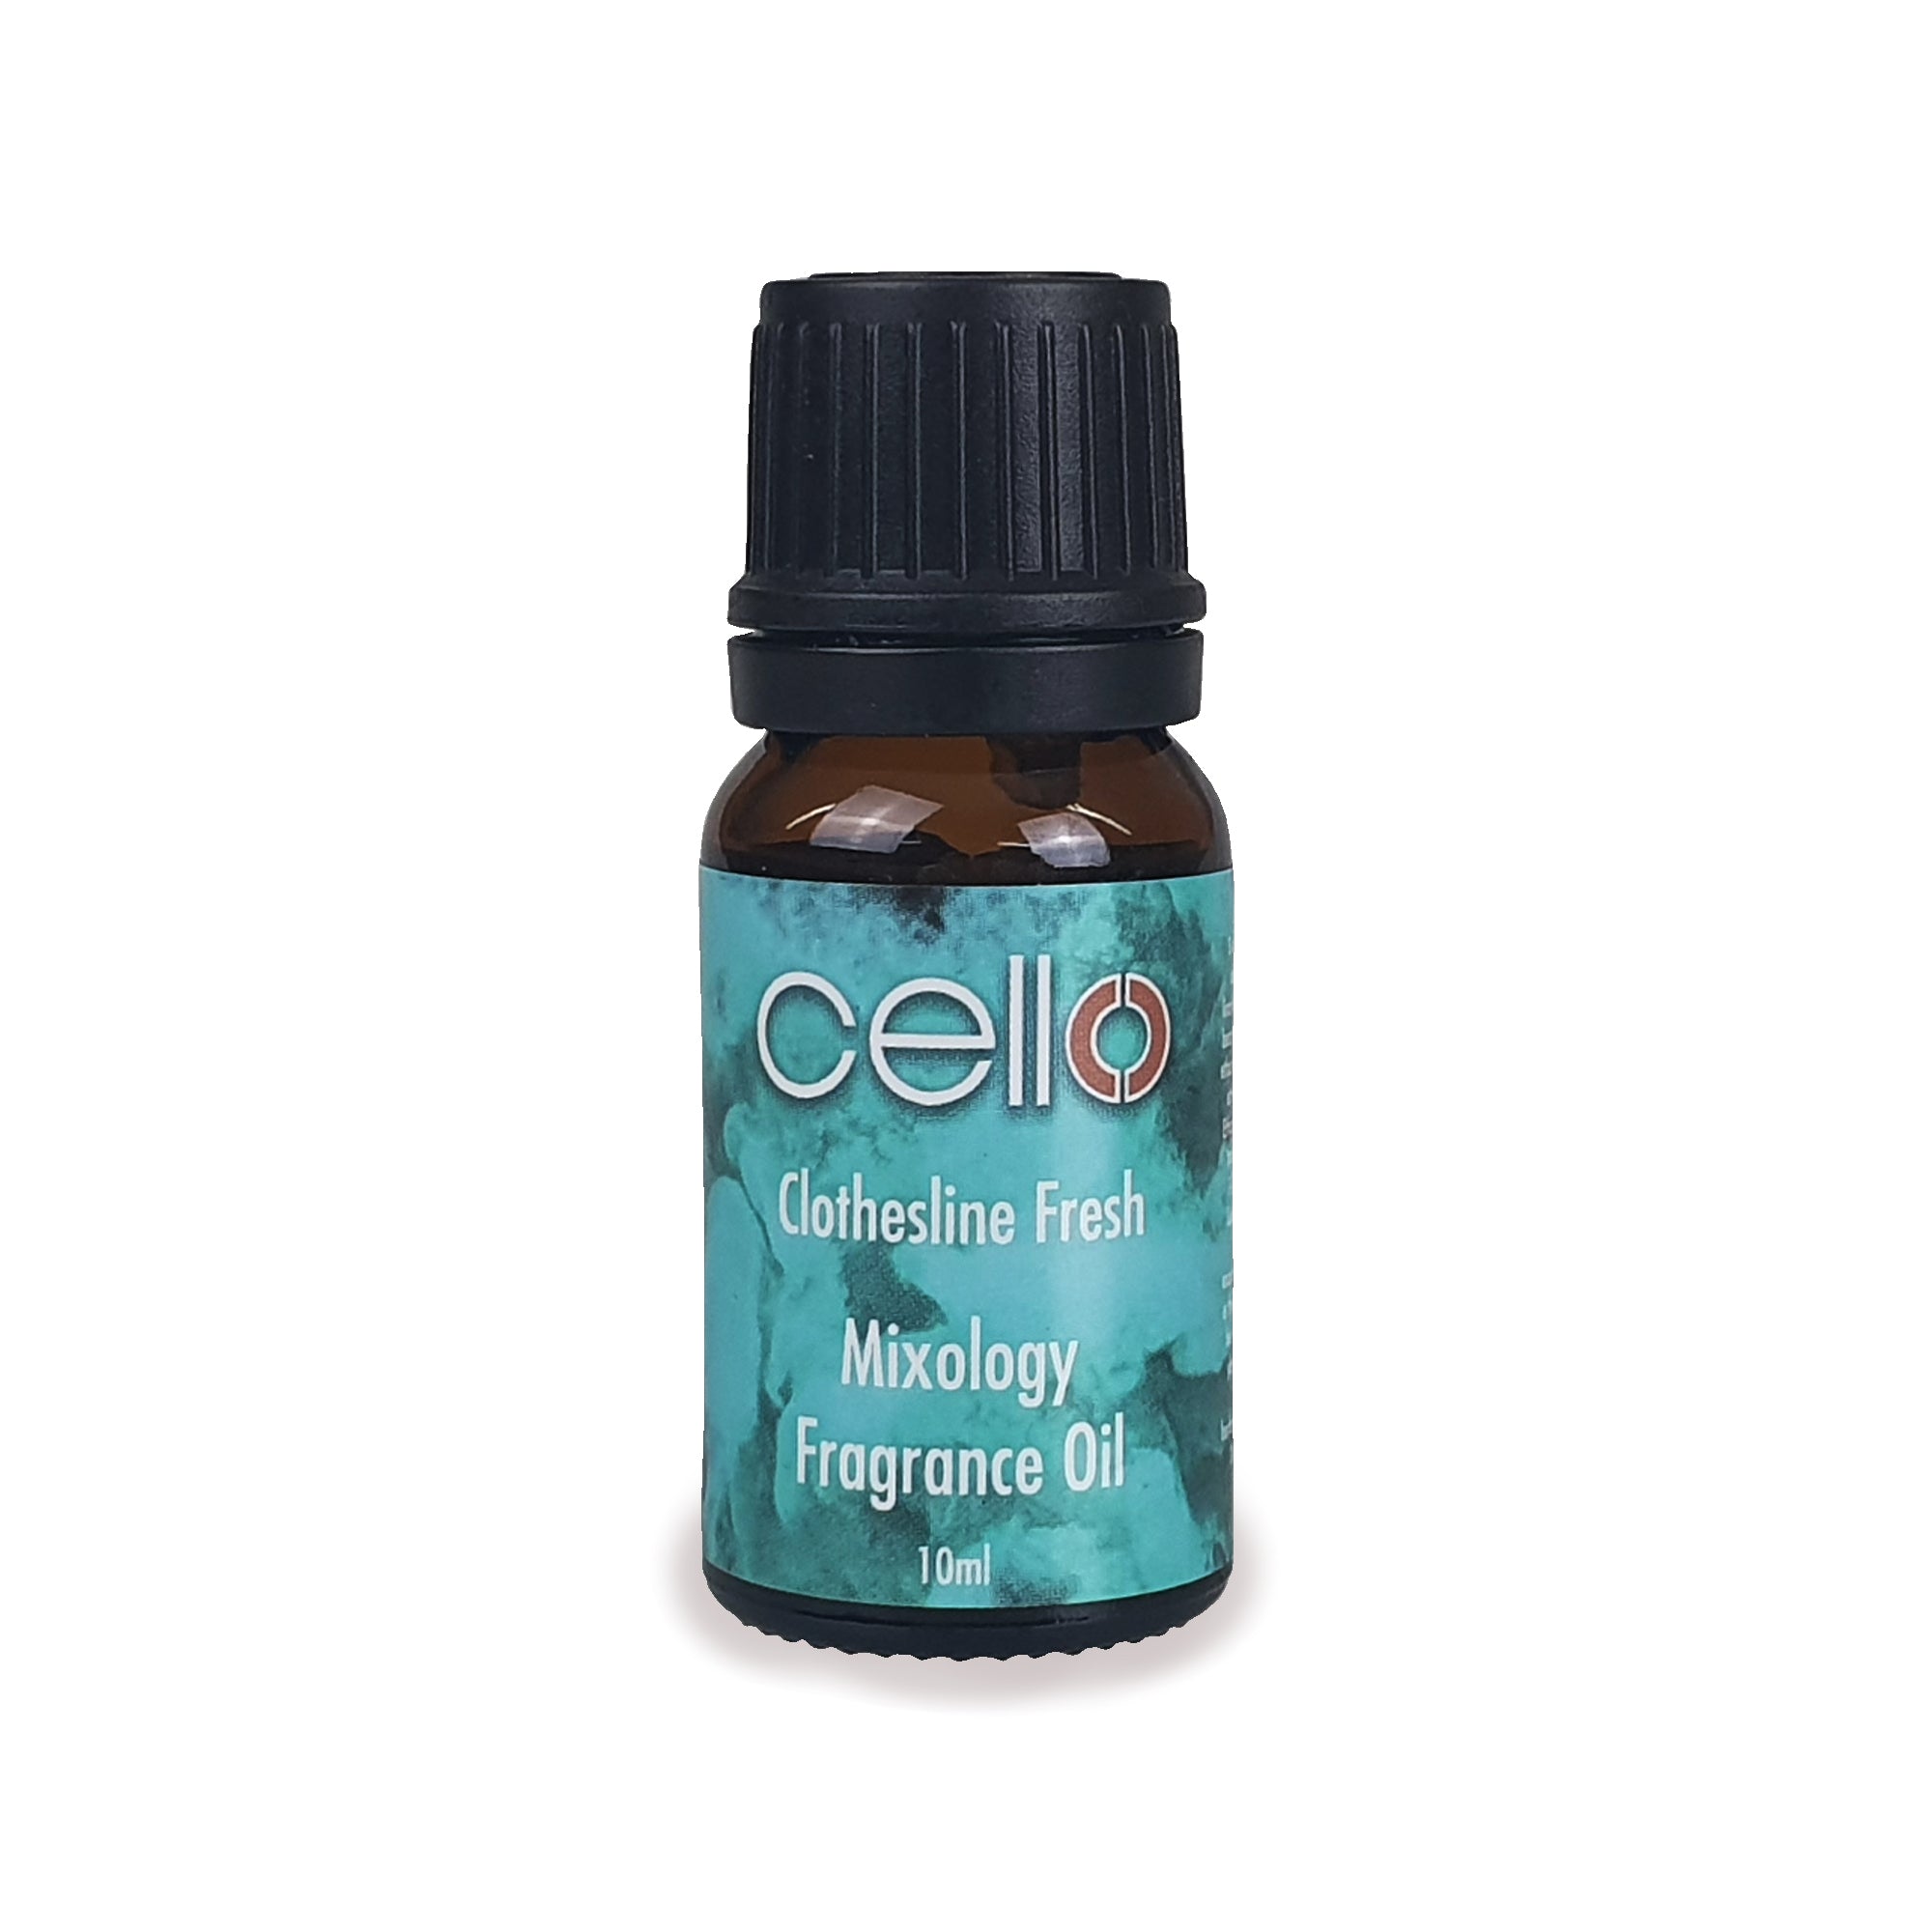 Cello - Mixology Fragrance Oils - Clothesline Fresh